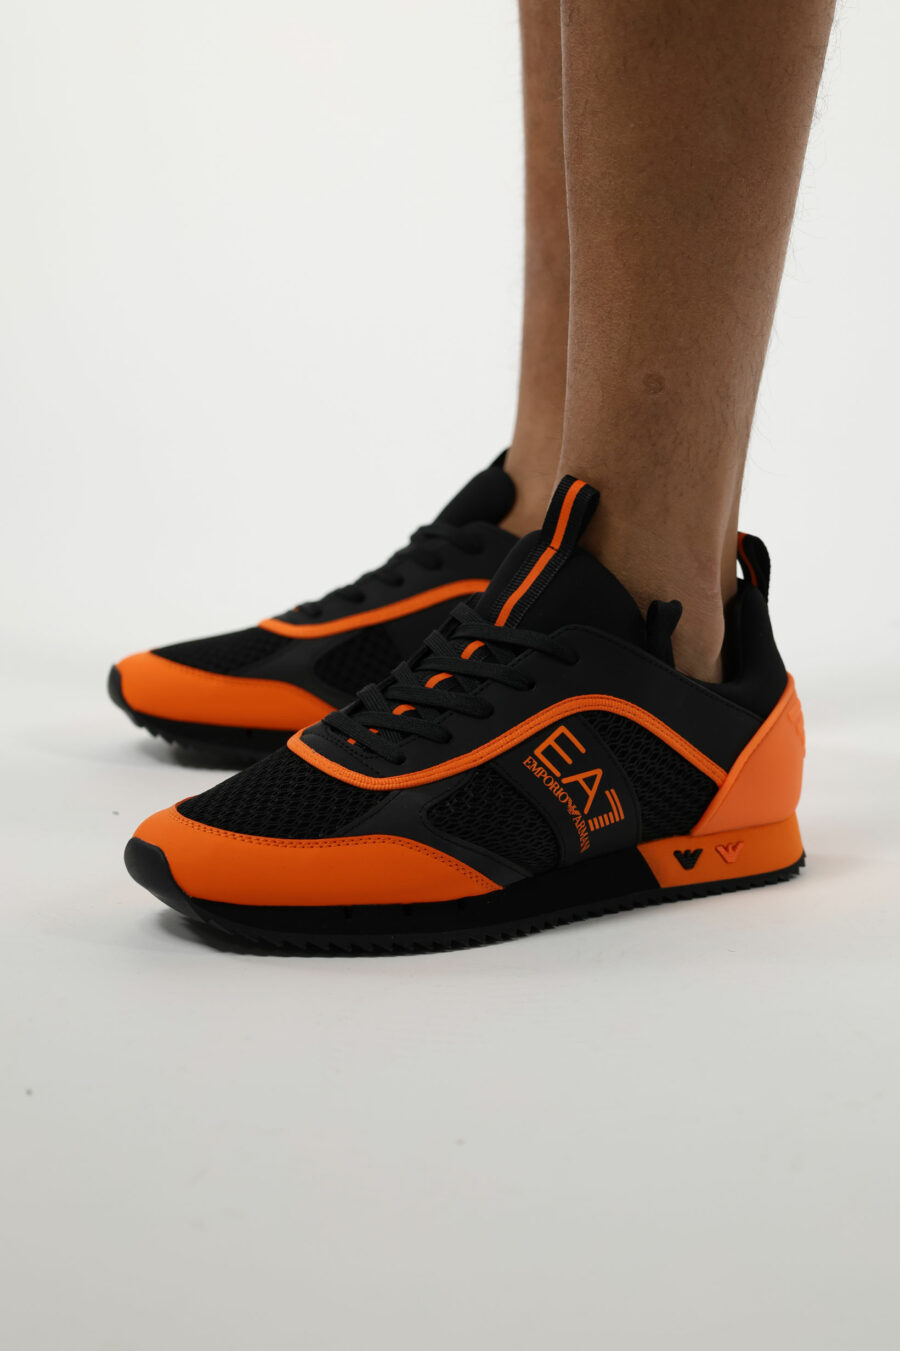 Zapatillas negras con logo "lux identity" naranja - 110900